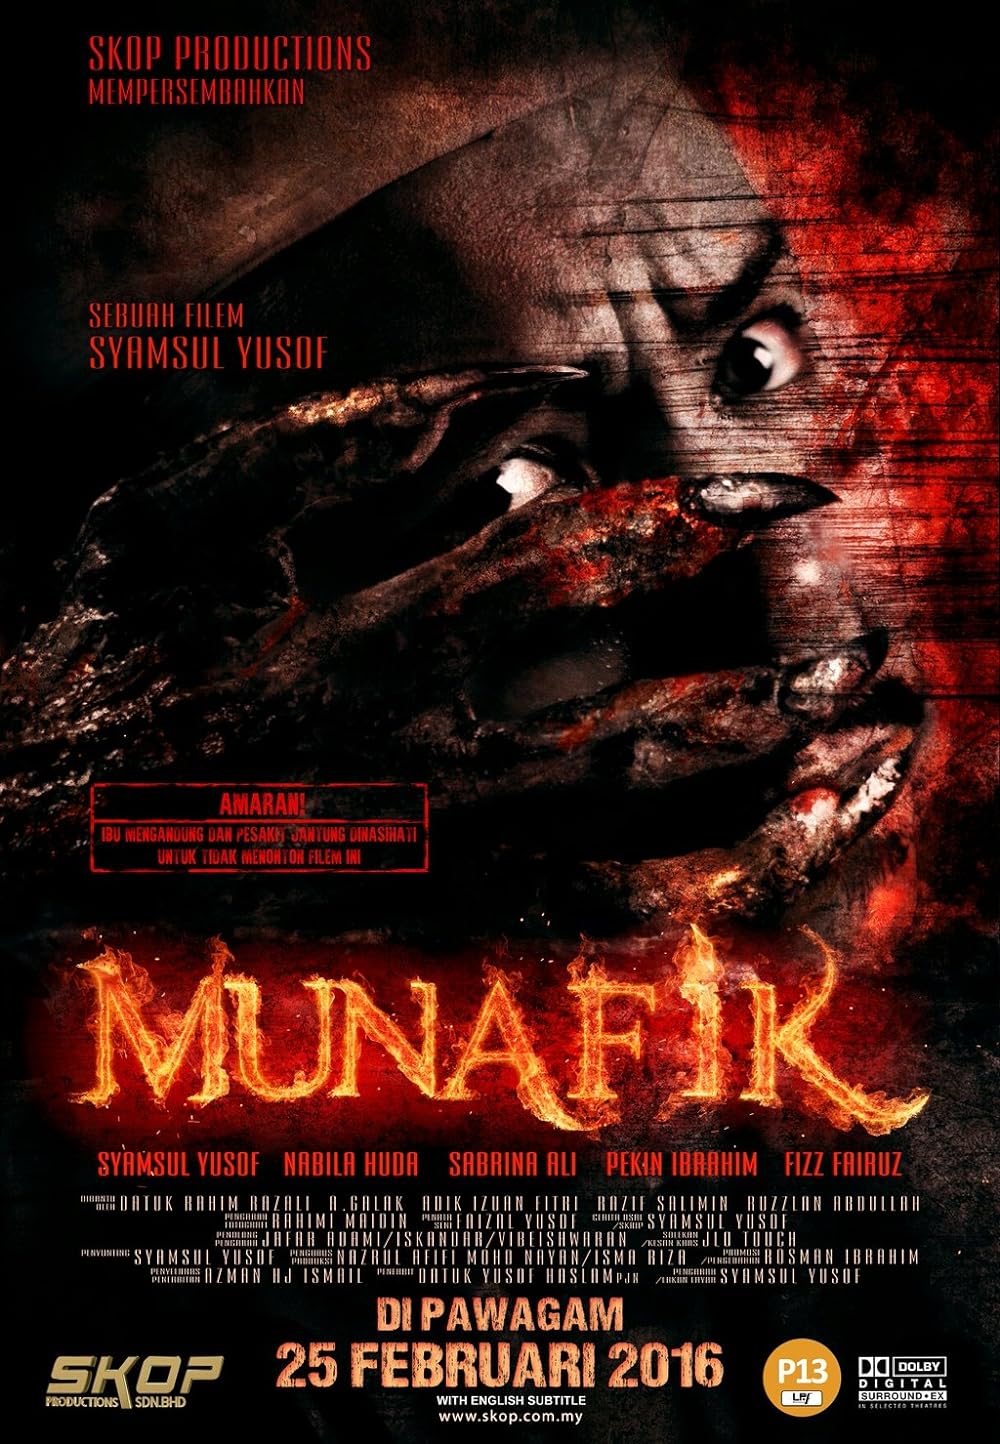 FULL MOVIE: Munafik (2016)